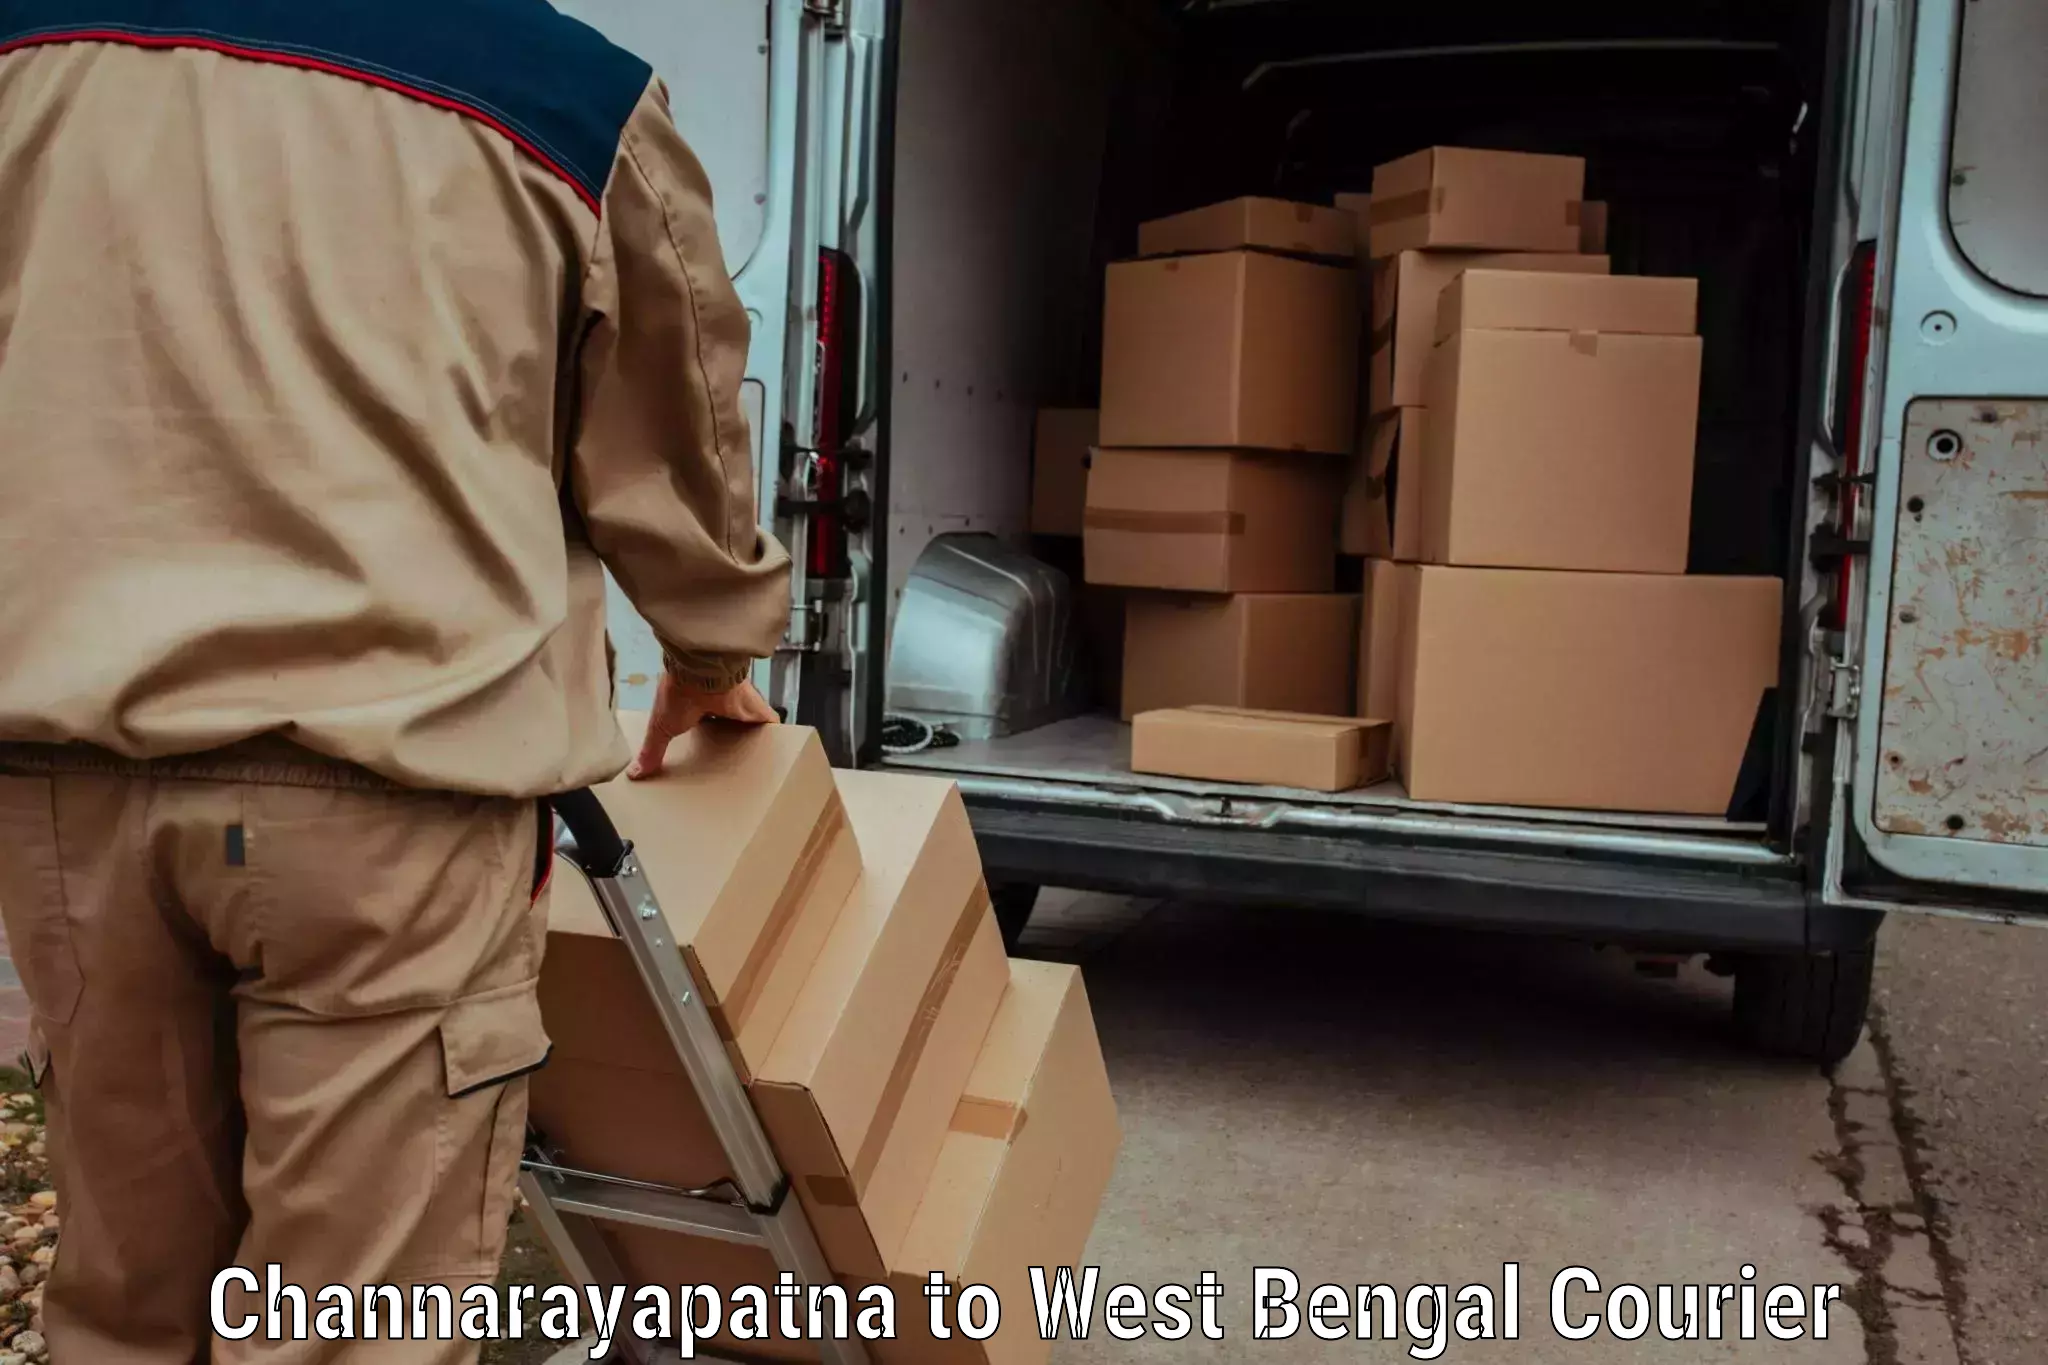 Courier service innovation in Channarayapatna to Hemtabad